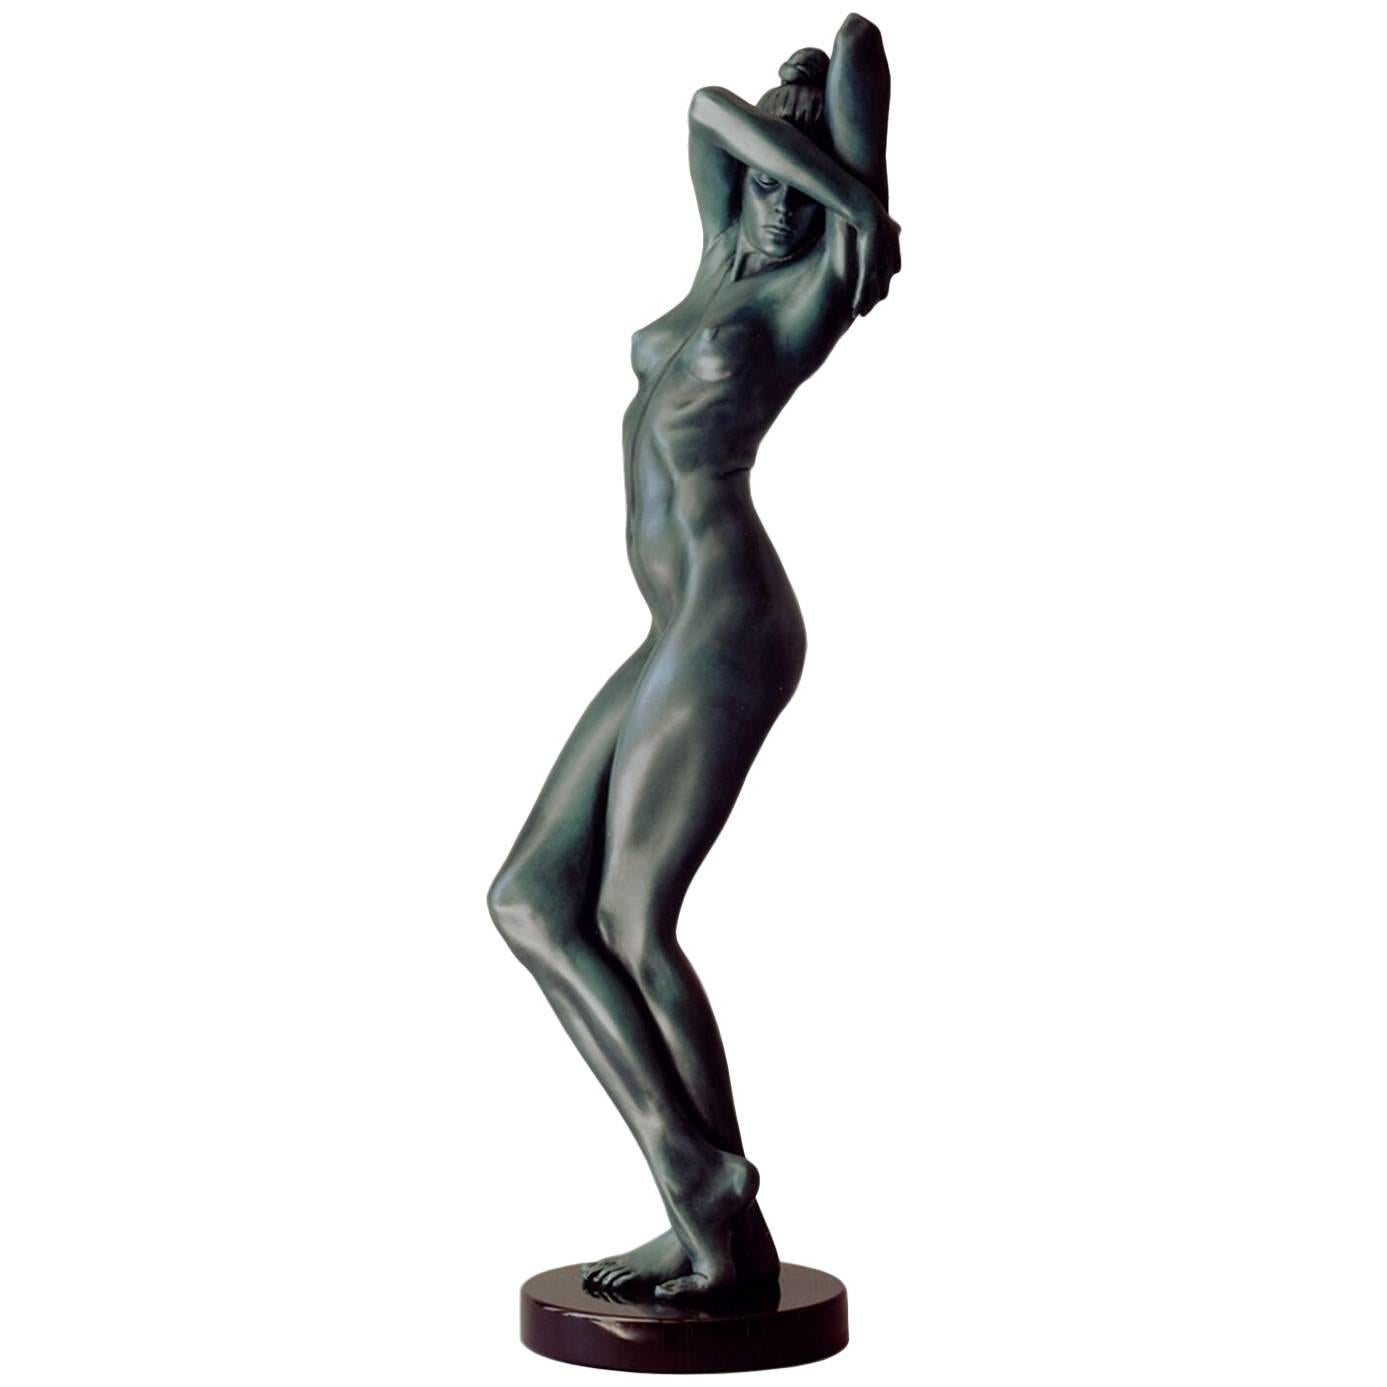 Tanya Ragir "Danielle" Bronze Sculpture, Limited Edition of 9